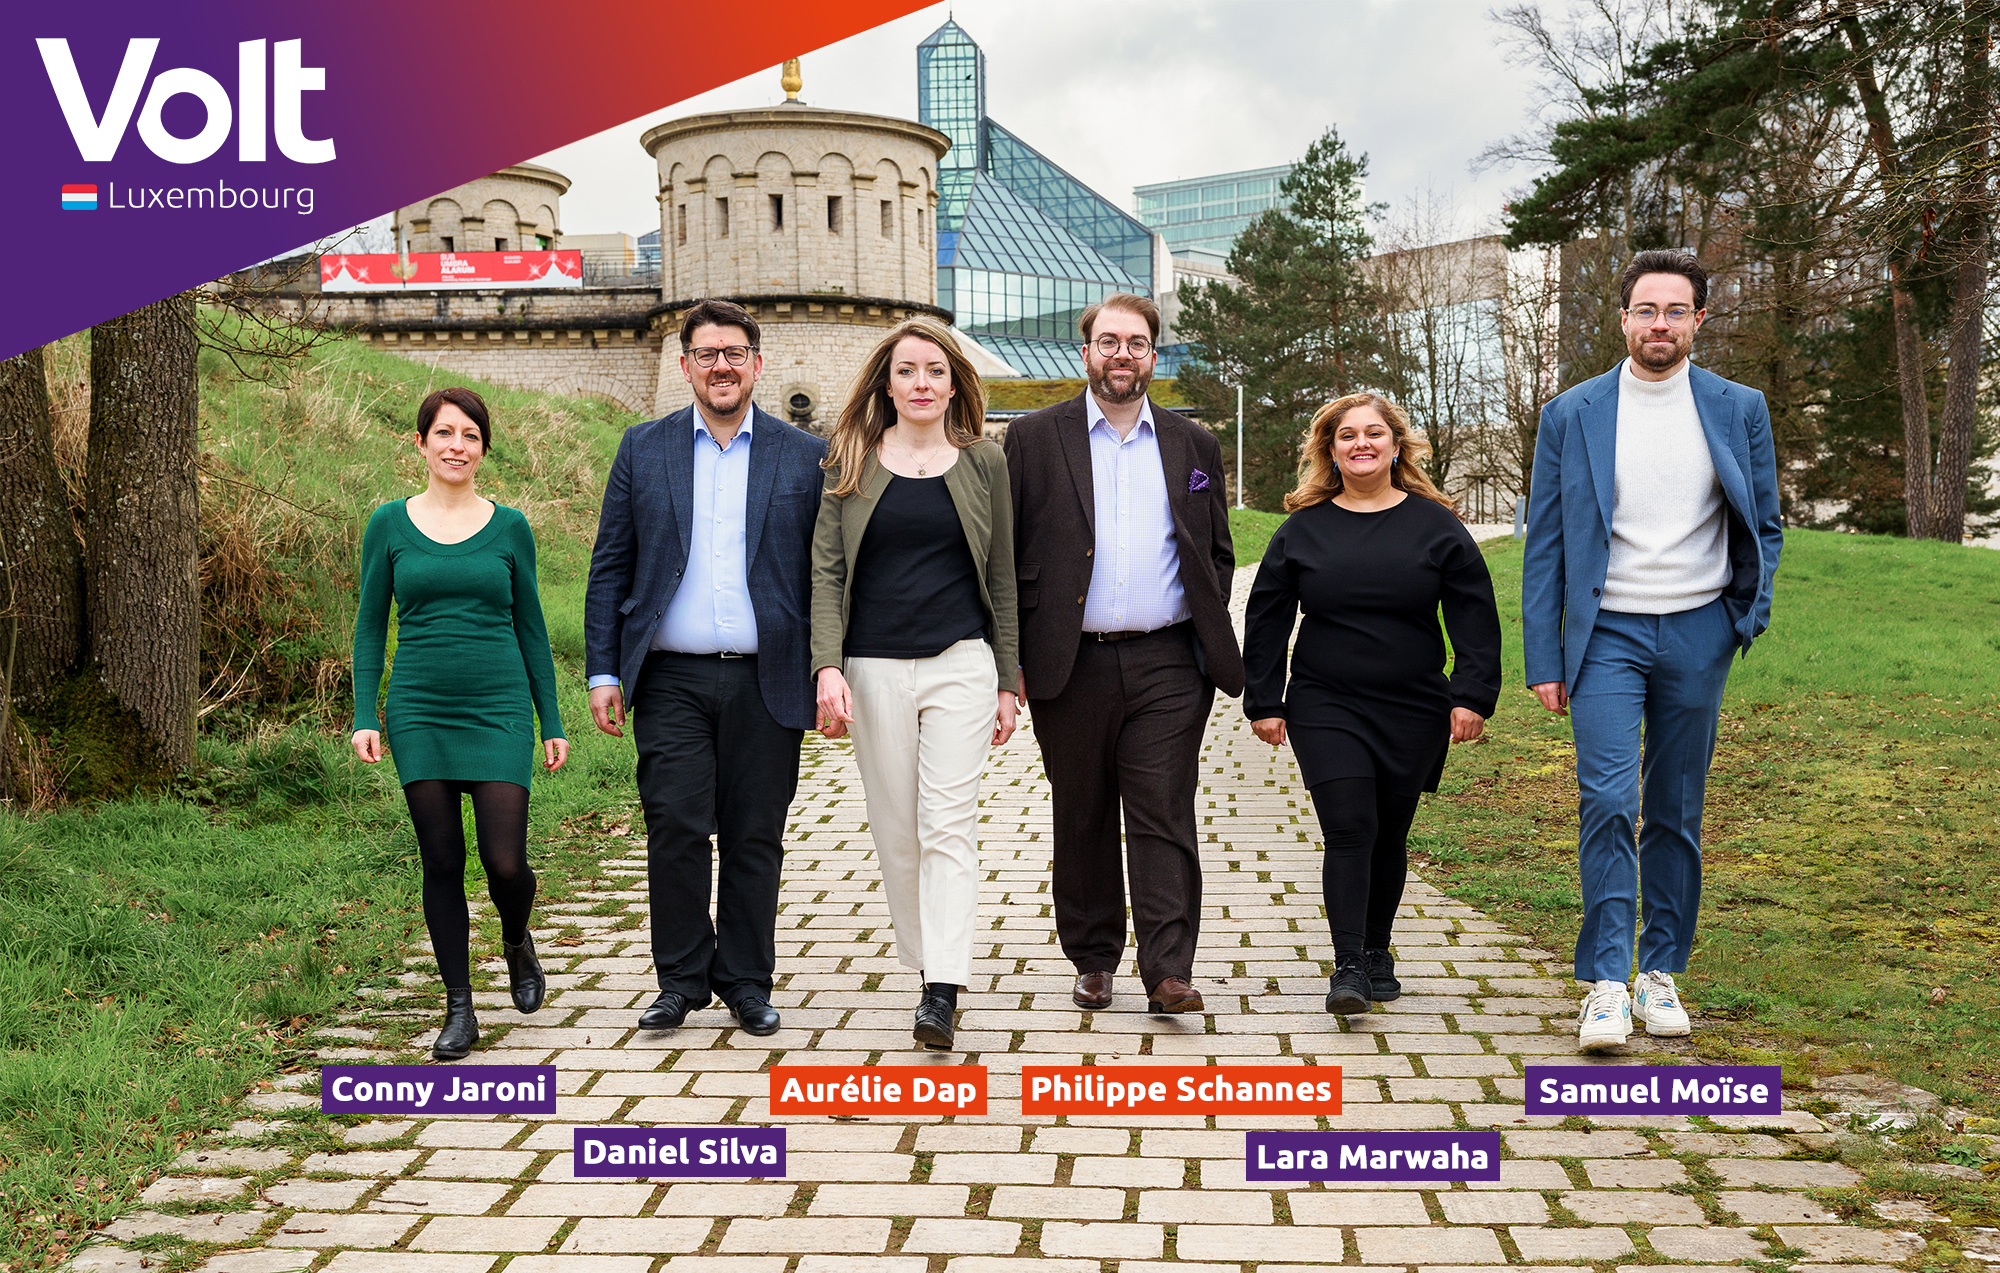 The 6 Volt Luxembourg candidates, from left to right: Conny Jaroni, Daniel Silva, Aurélie Dap, Philippe Schannes, Lara Marwaha, Samuel Moïse